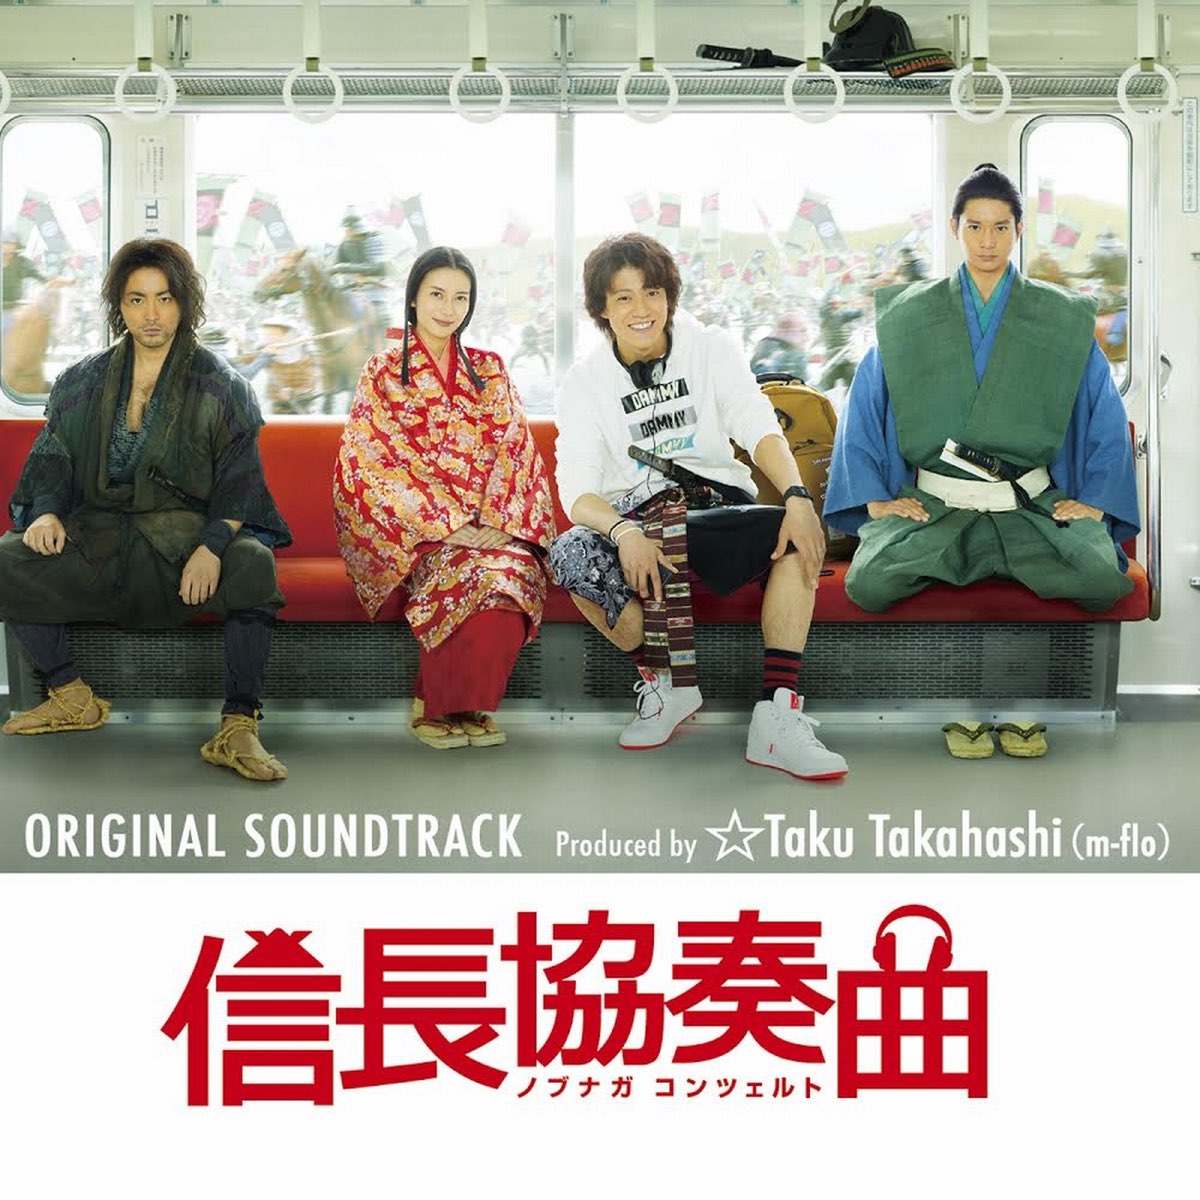 Nobunaga Concerto Original Soundtrack Produced By Taku Takahashi By Taku Takahashi On Itunes